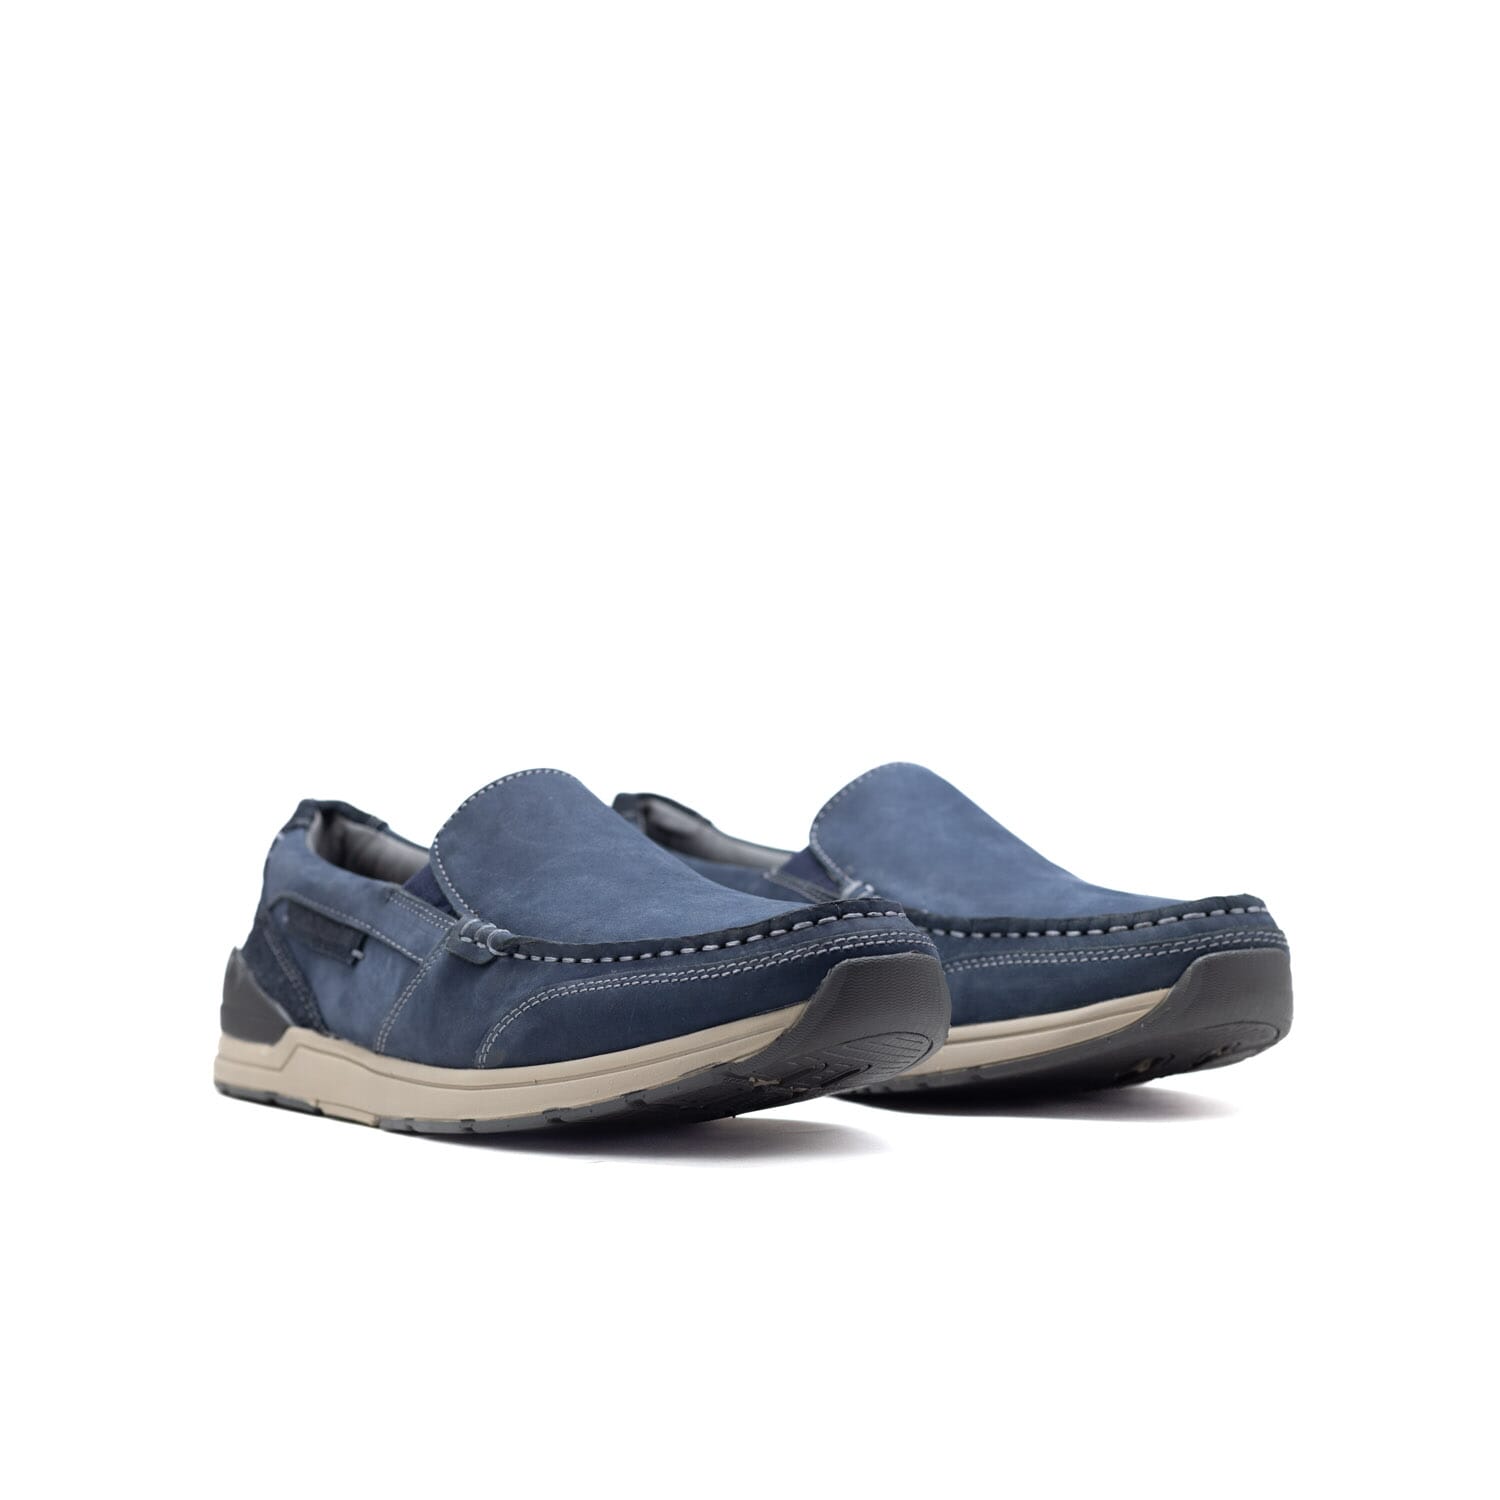 HUSH PUPPIES – FALCON MOCC SLIP – NAVY – Perocili Shoes